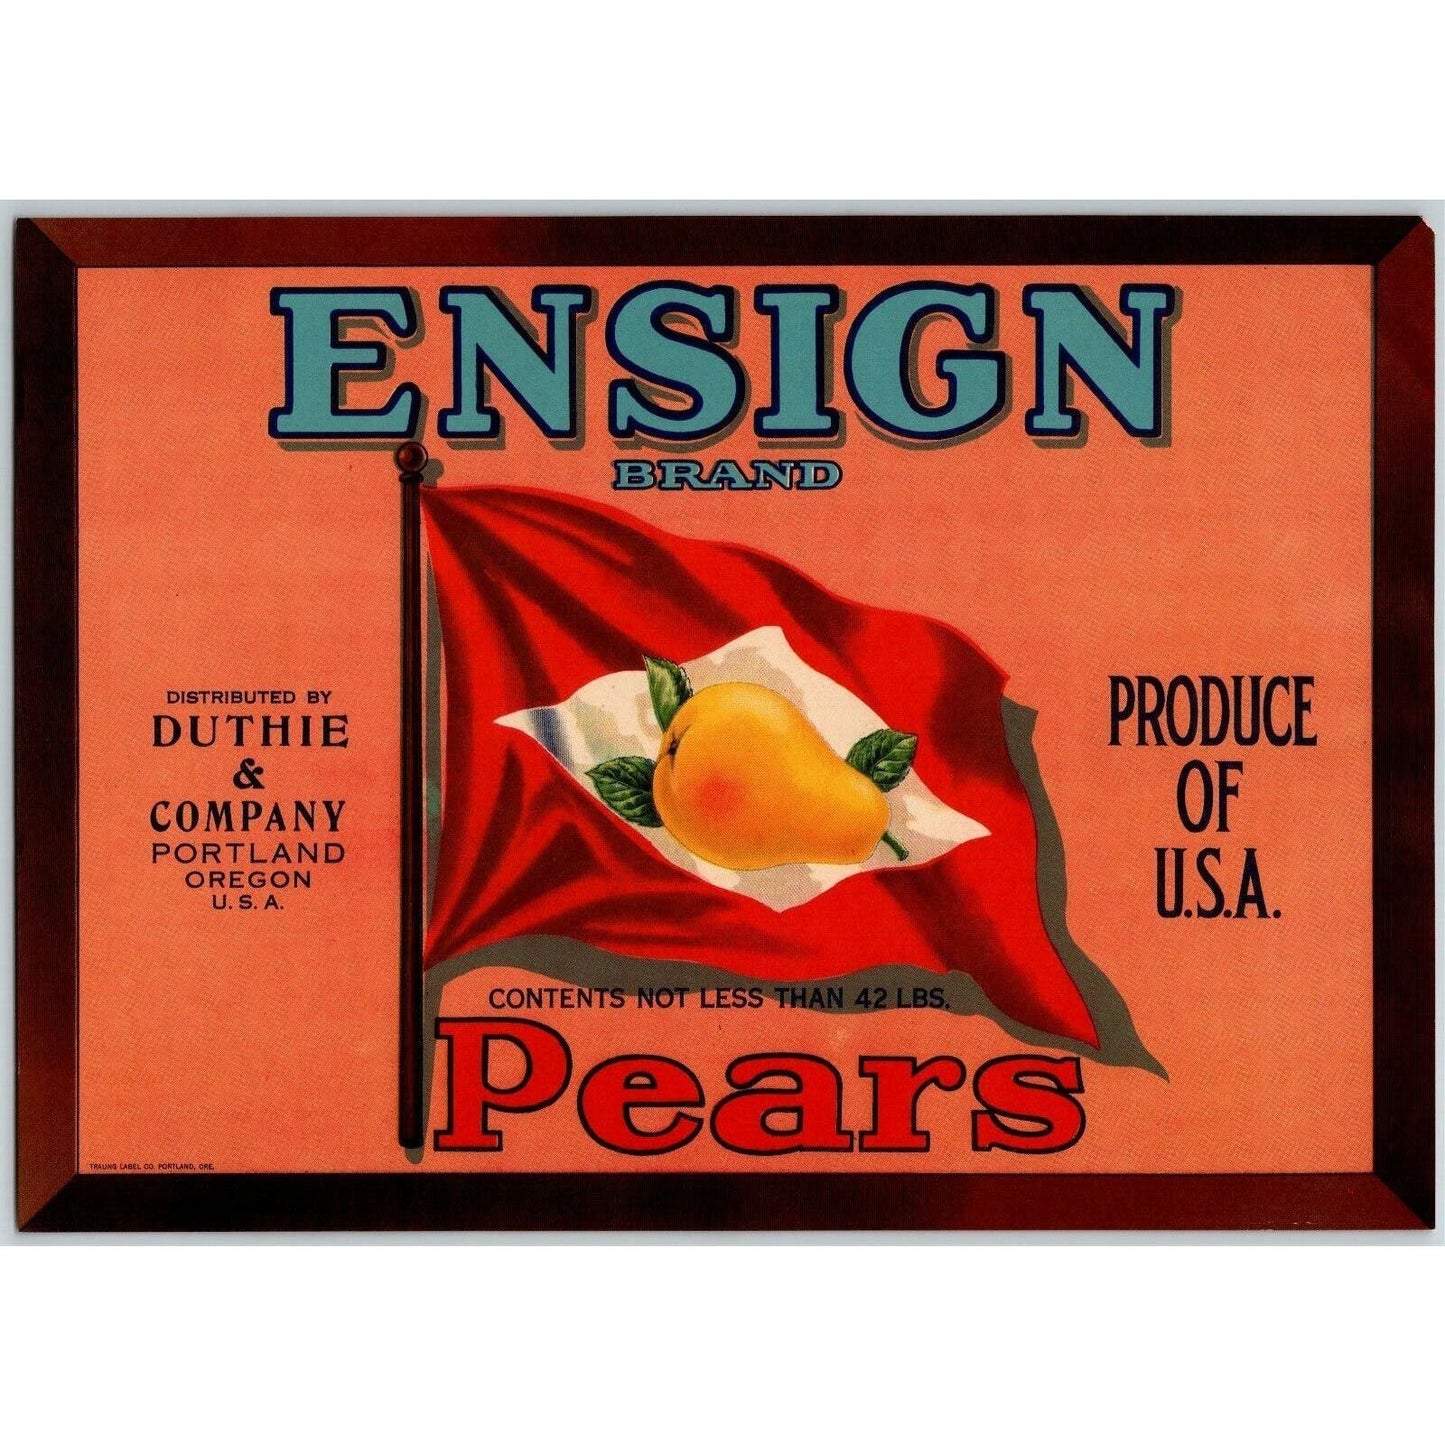 Ensign Brand Pears Vintage Original Paper Fruit Crate Label Duthie Portland Red